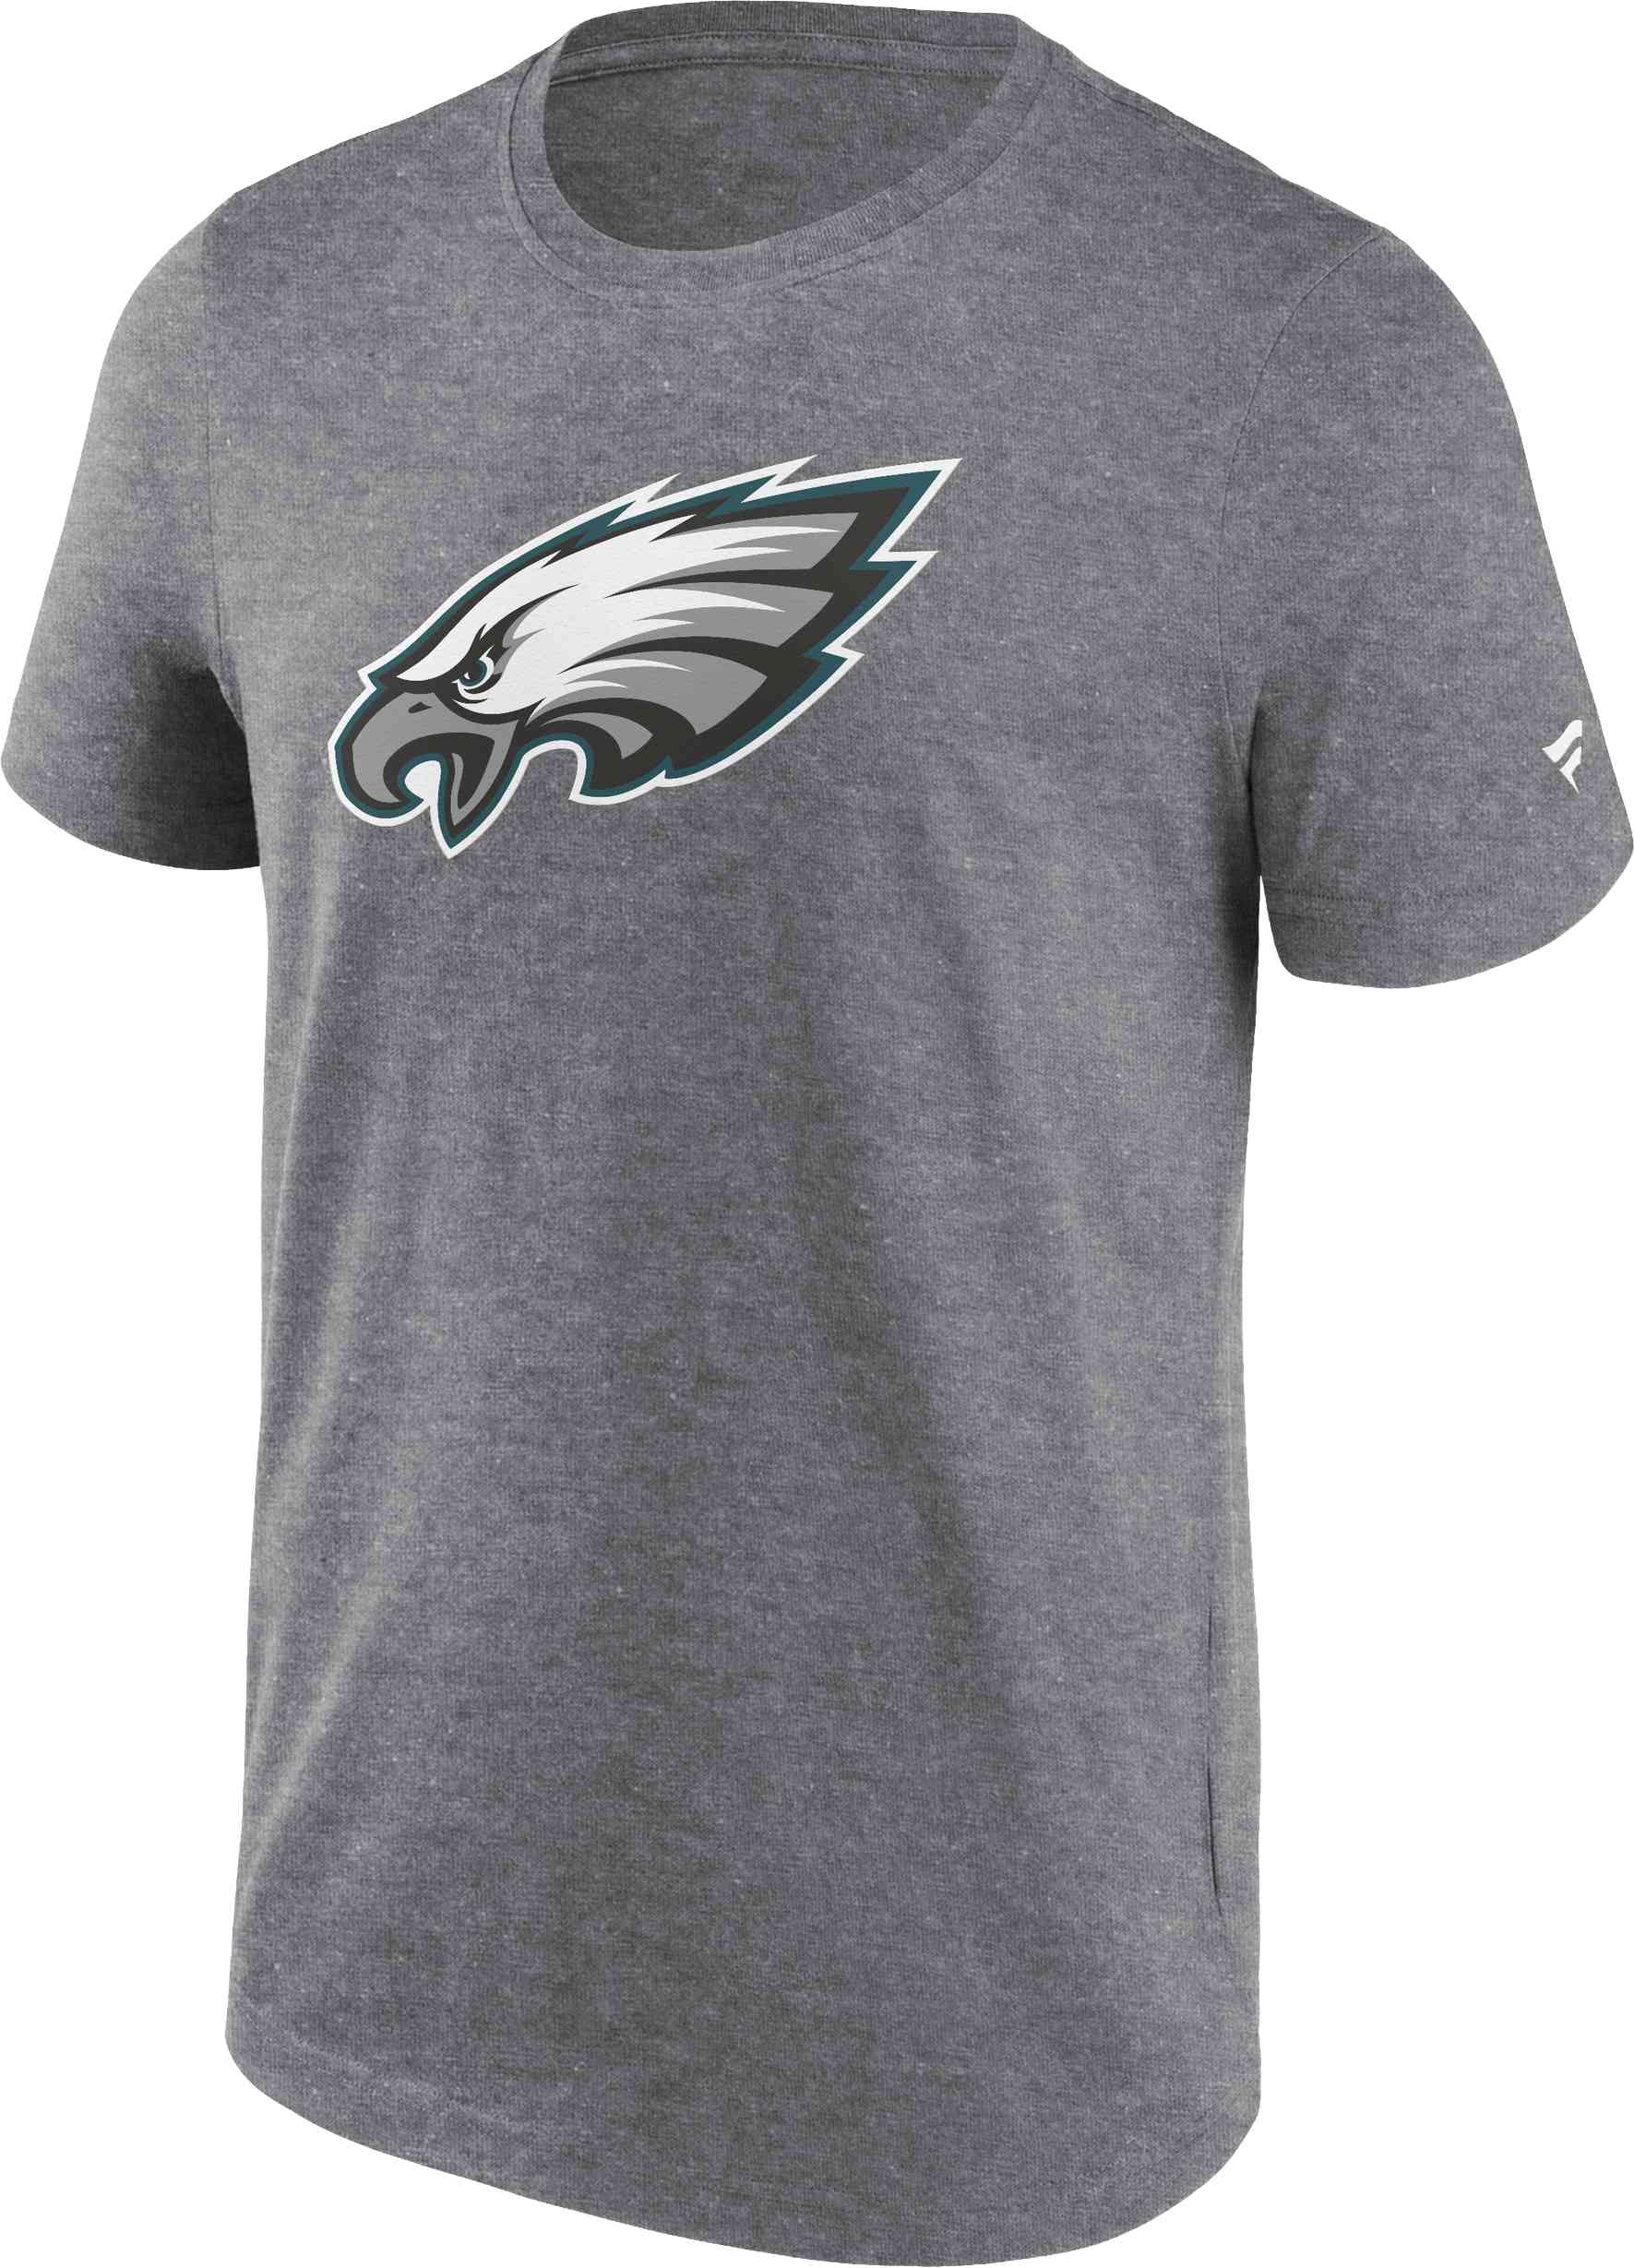 Fanatics - NFL Philadelphia Eagles Primary Logo Graphic T-Shirt